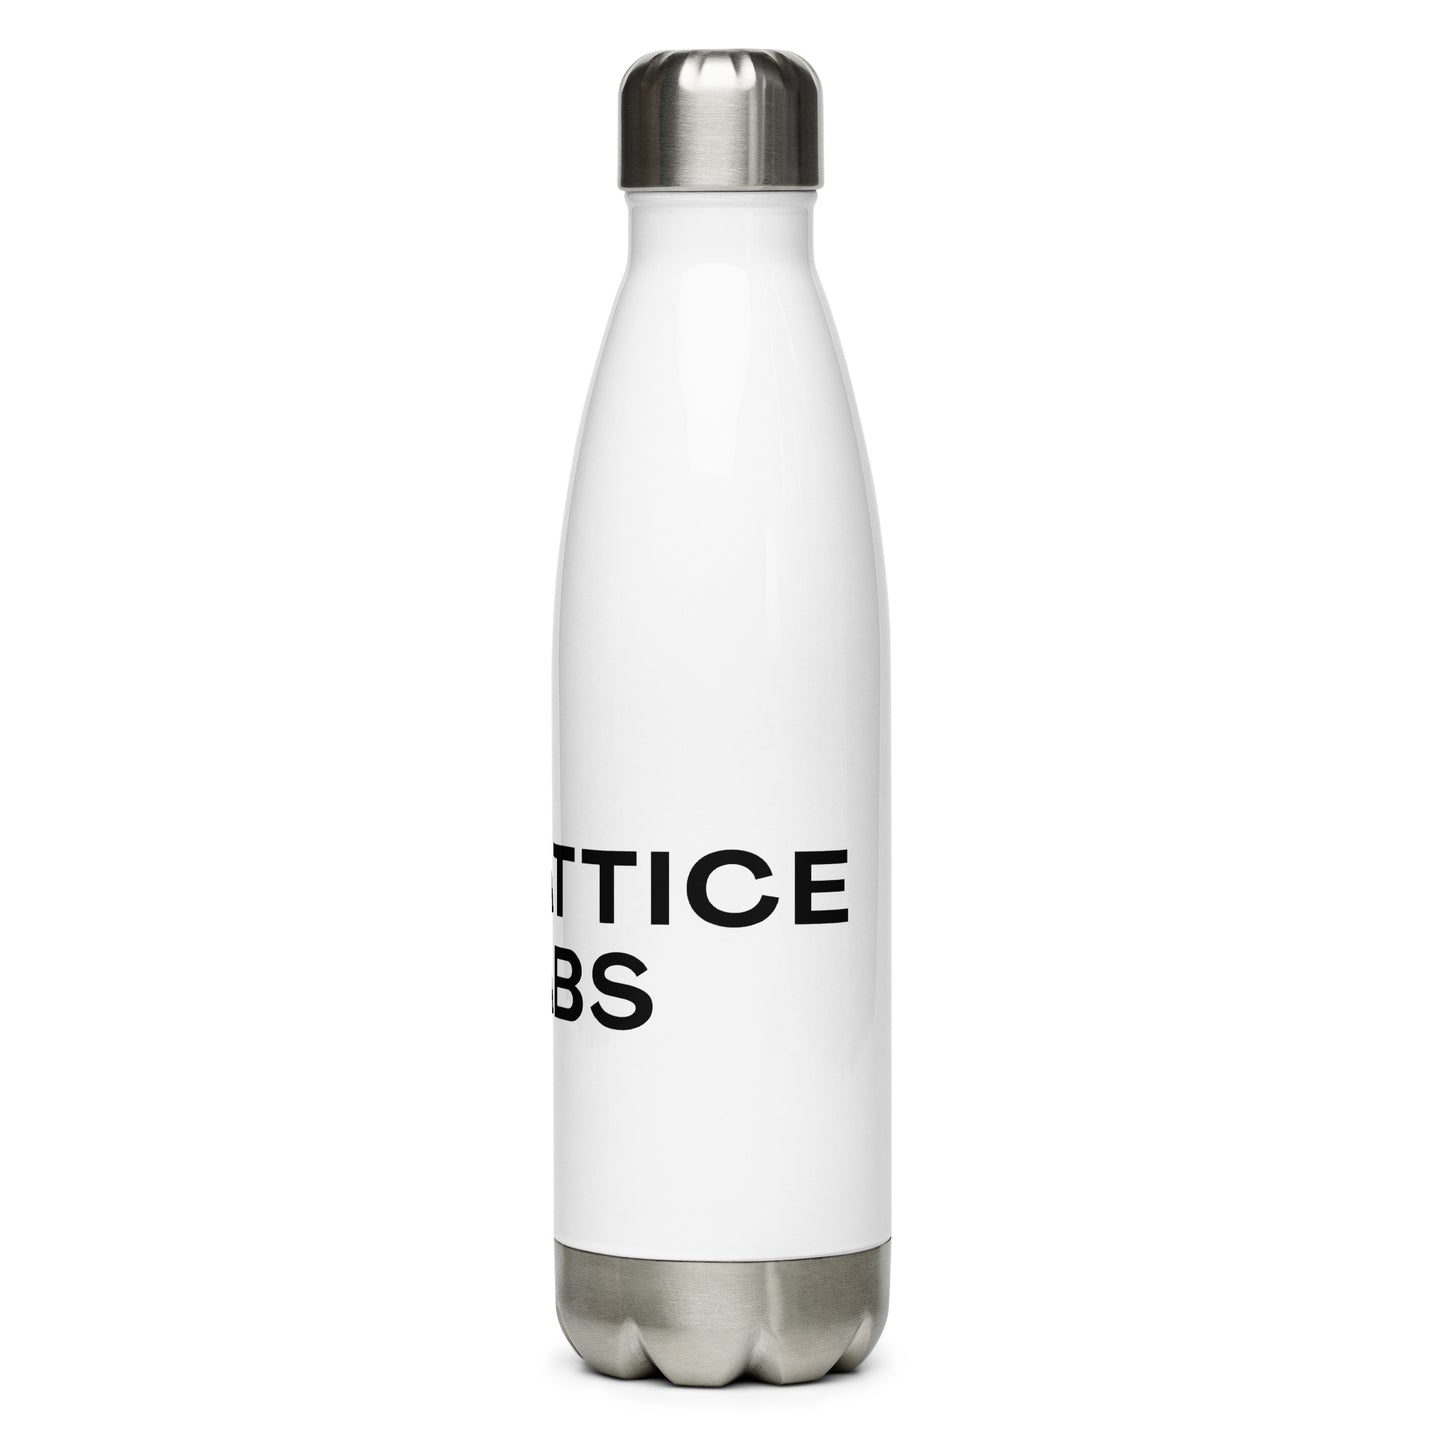 Lattice Labs Stainless Steel Water Bottle